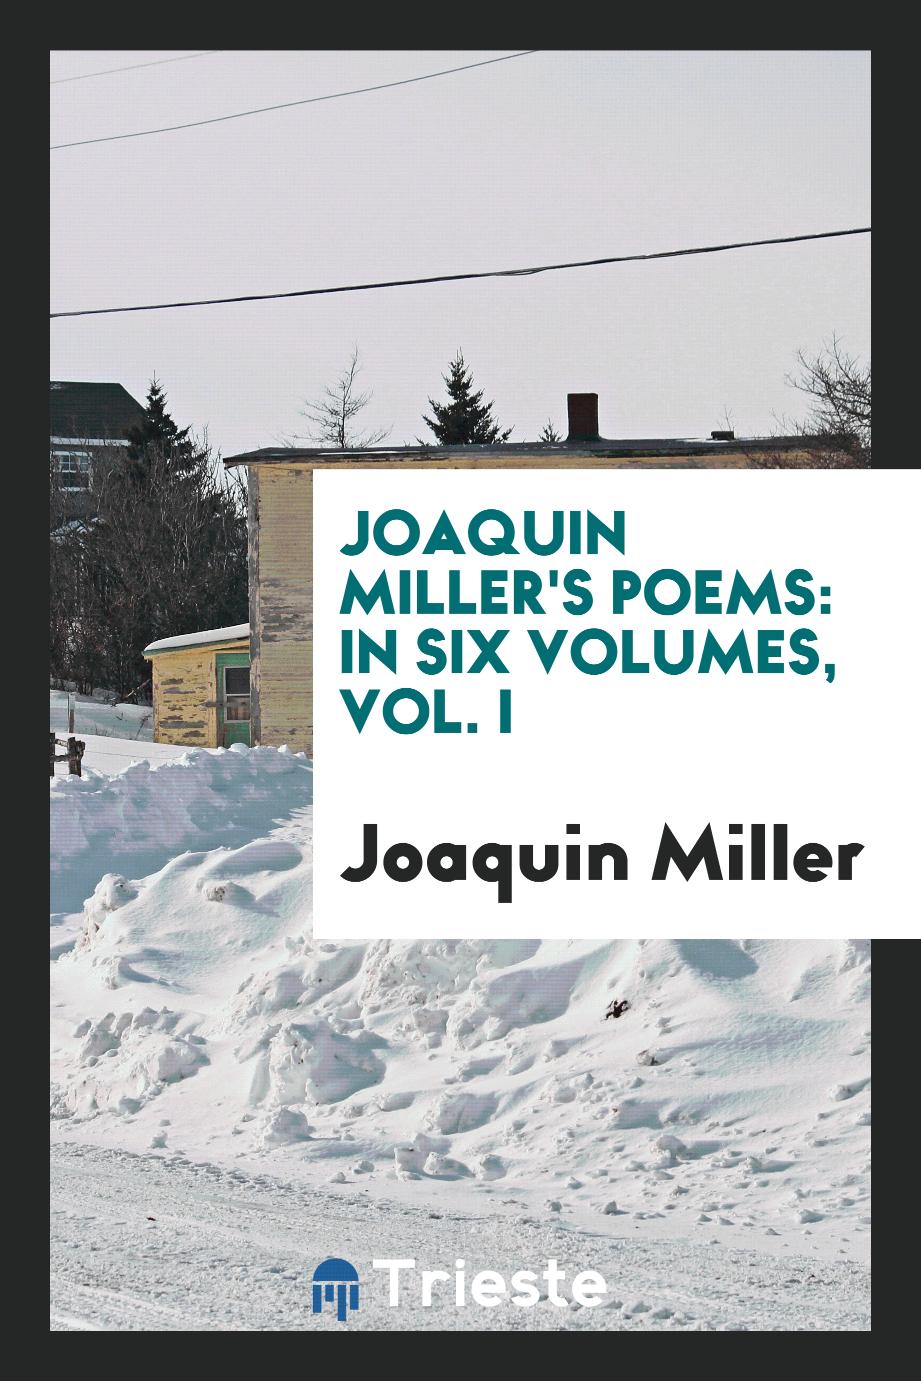 Joaquin Miller's poems: in six volumes, Vol. I